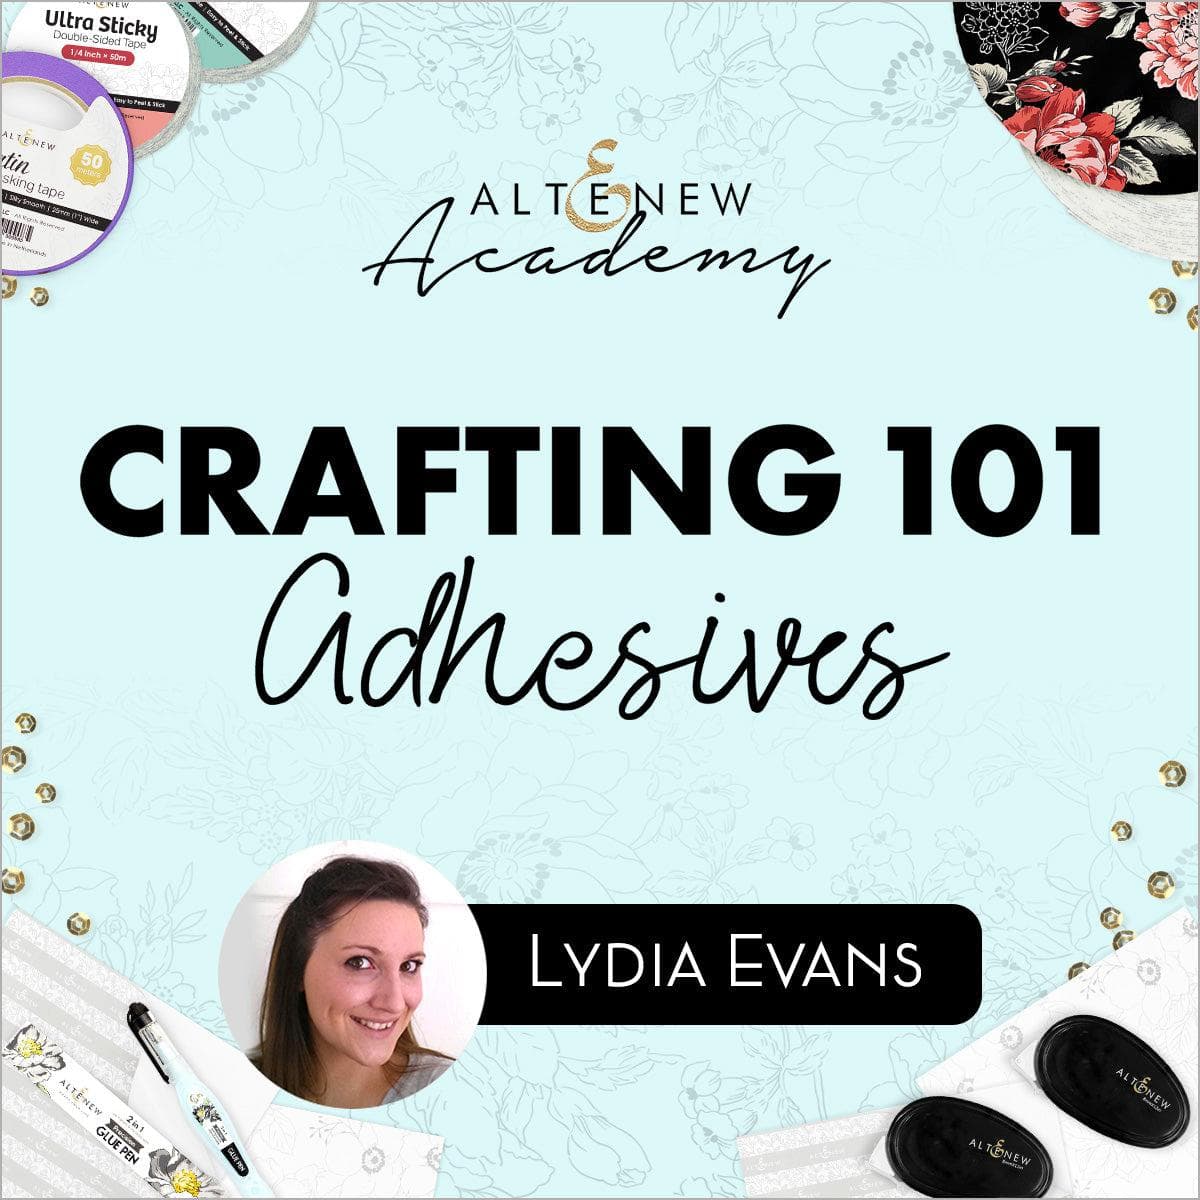 Altenew Class Crafting 101: Adhesives